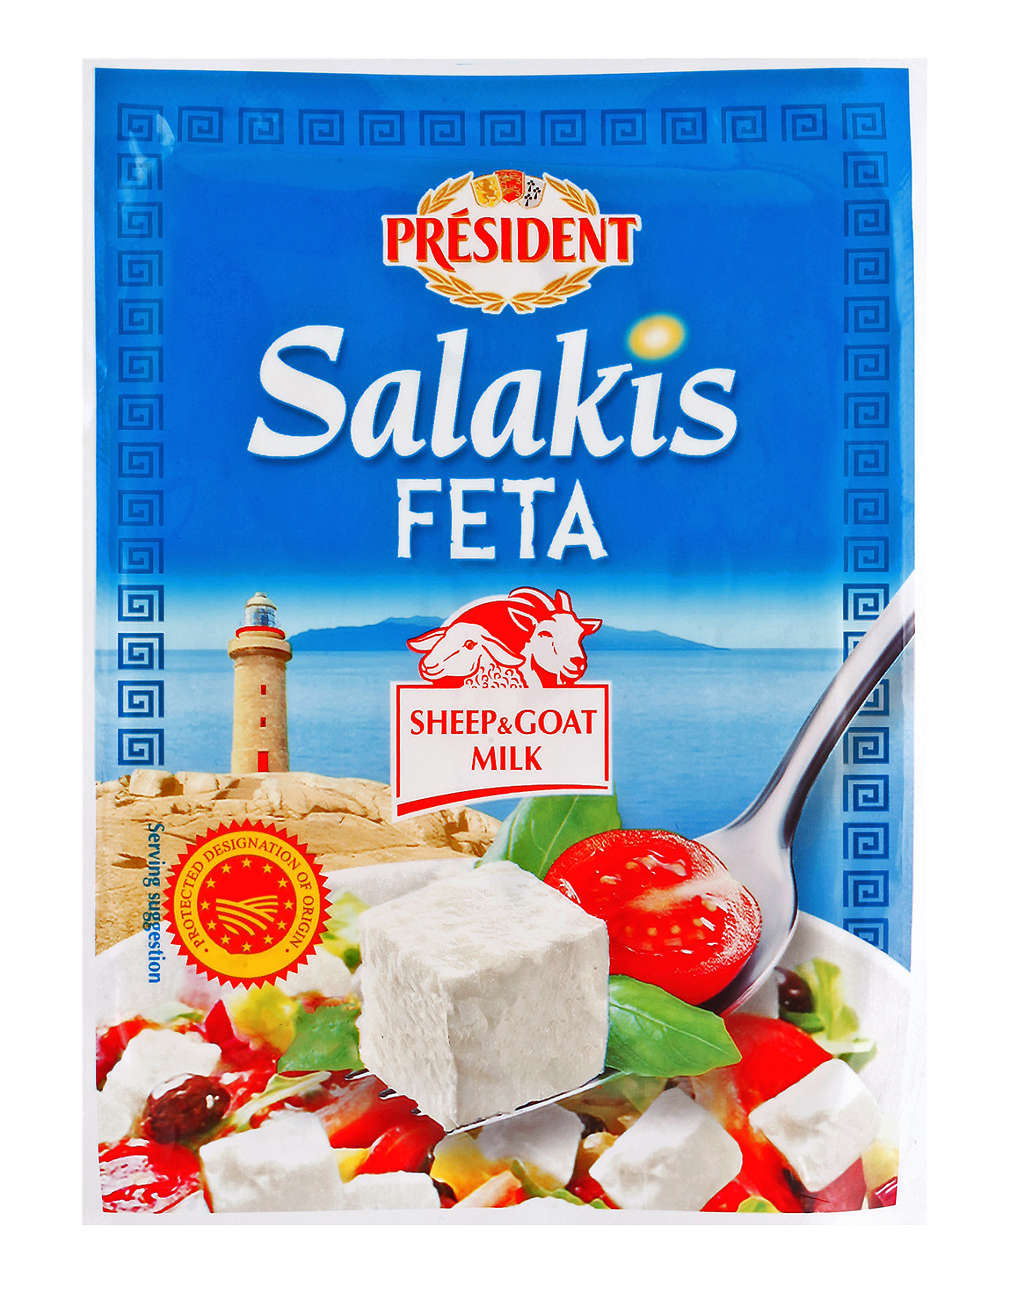 Fotografija ponude President Salakis feta sir